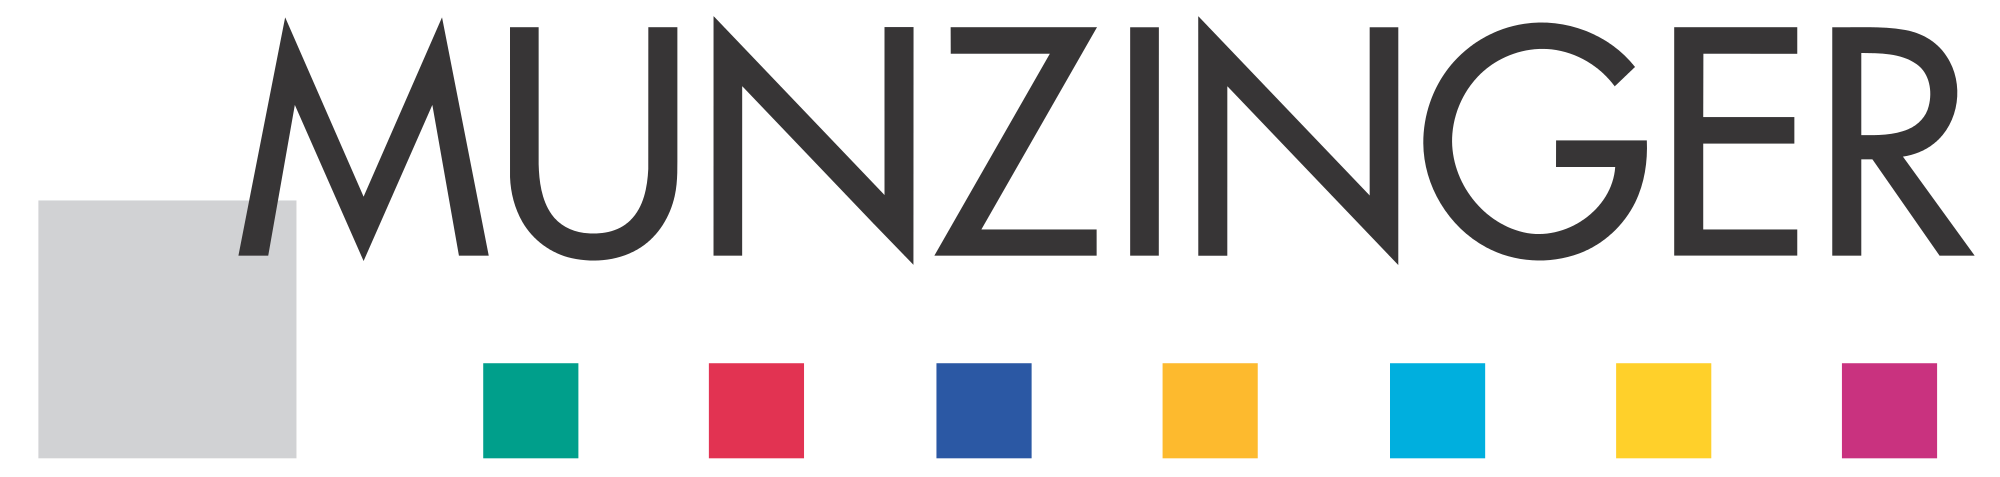 Logo munzinger hintergrundtransparent